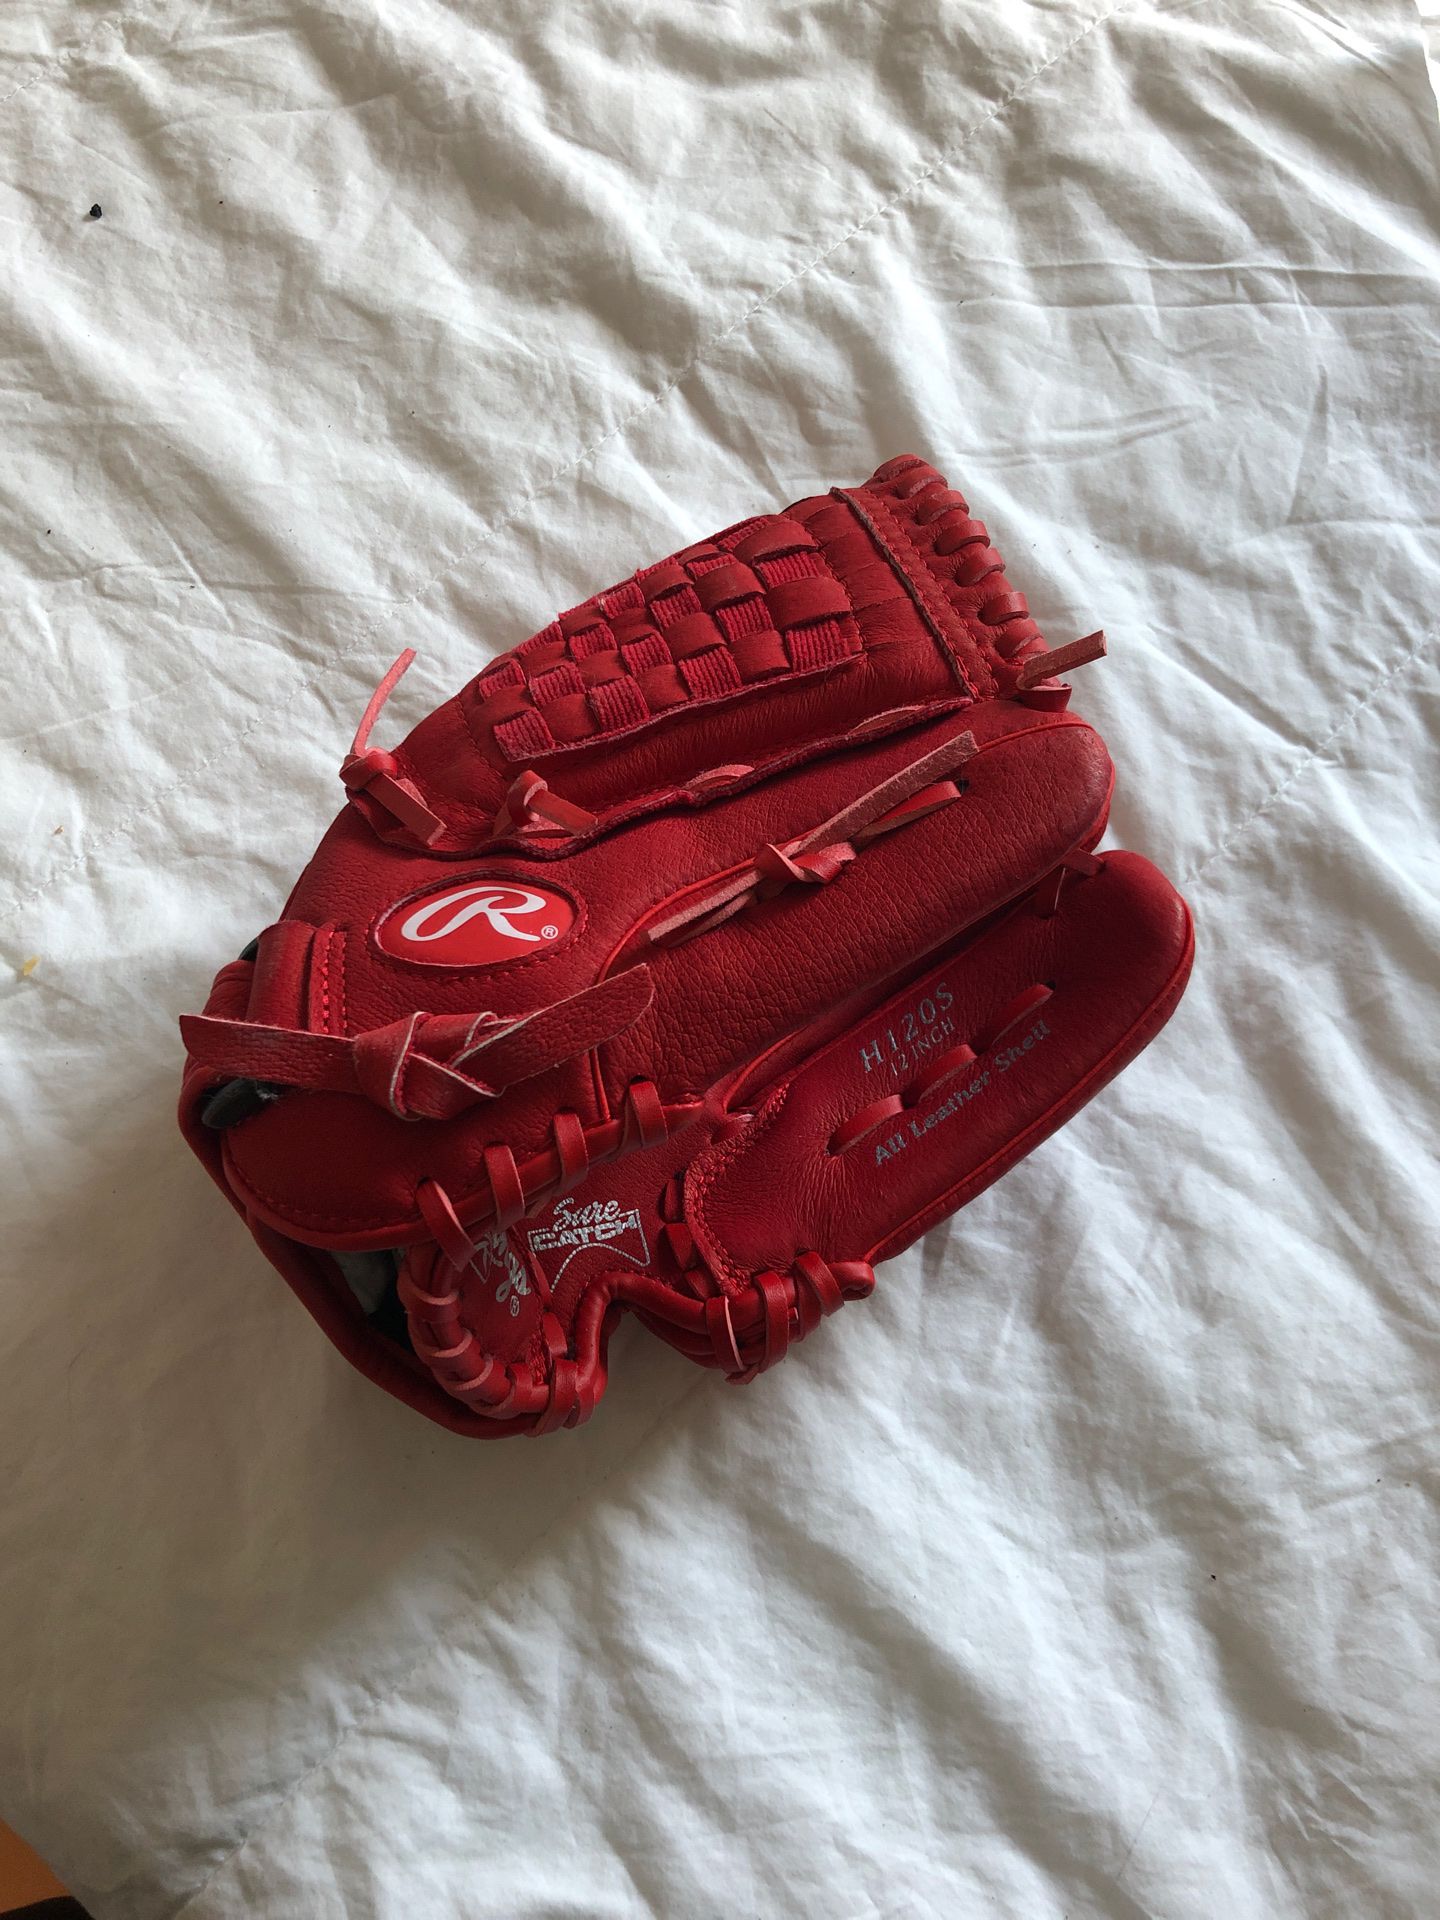 Red baseball glove